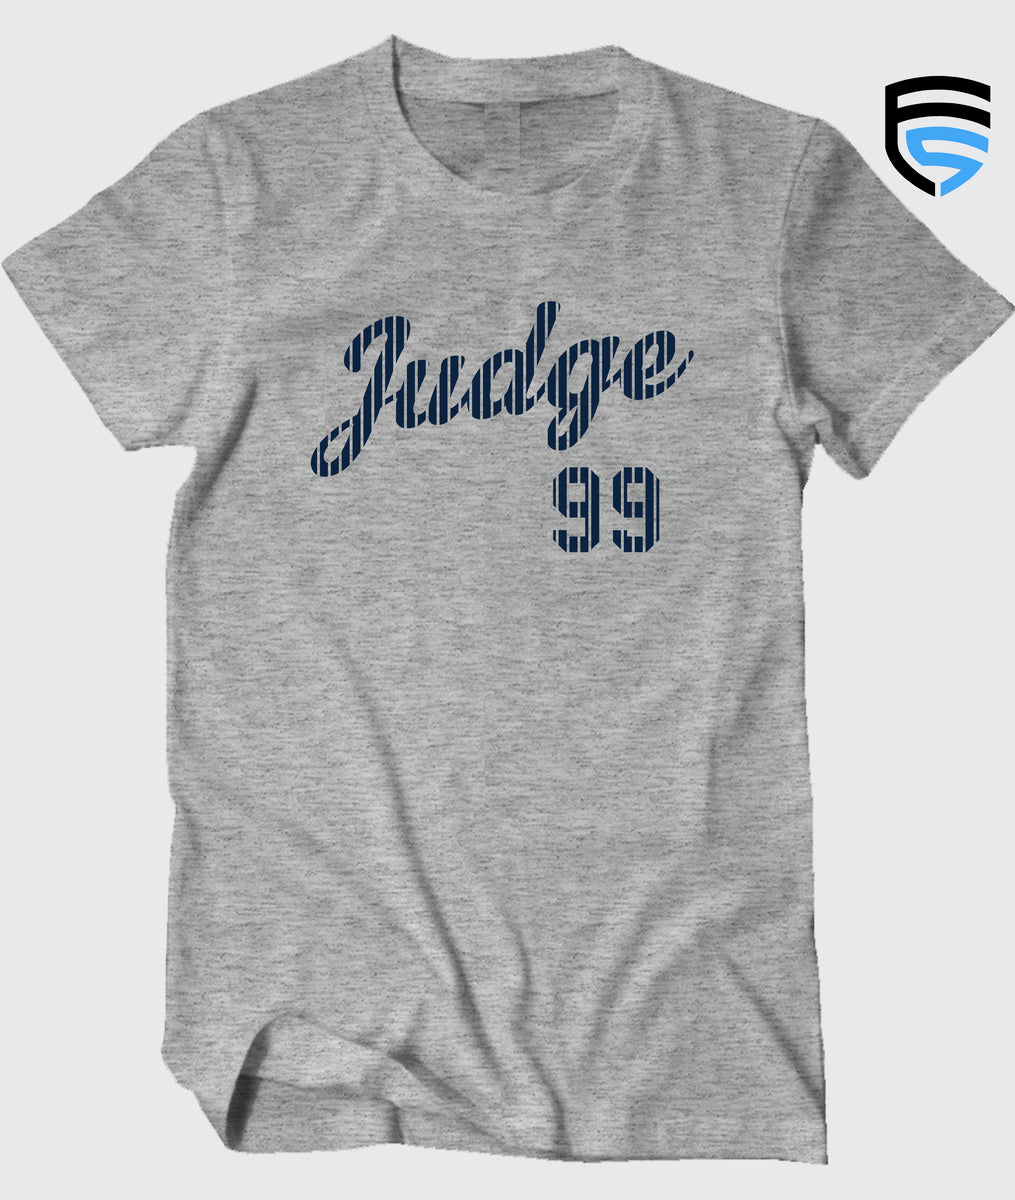 judge 99 t shirt